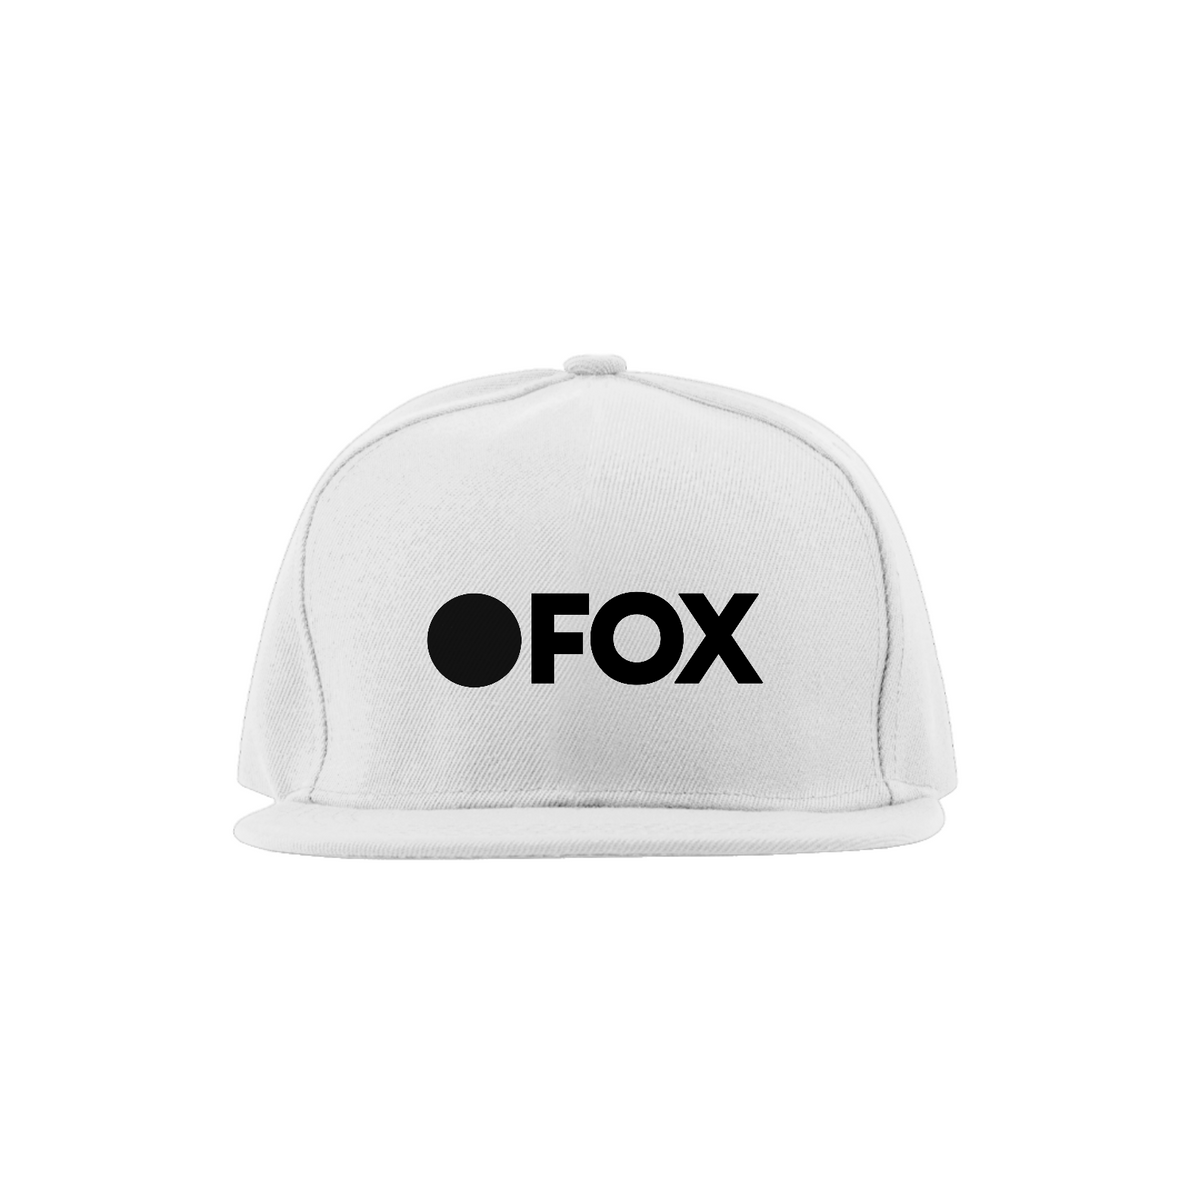 Nome do produto: .FOX